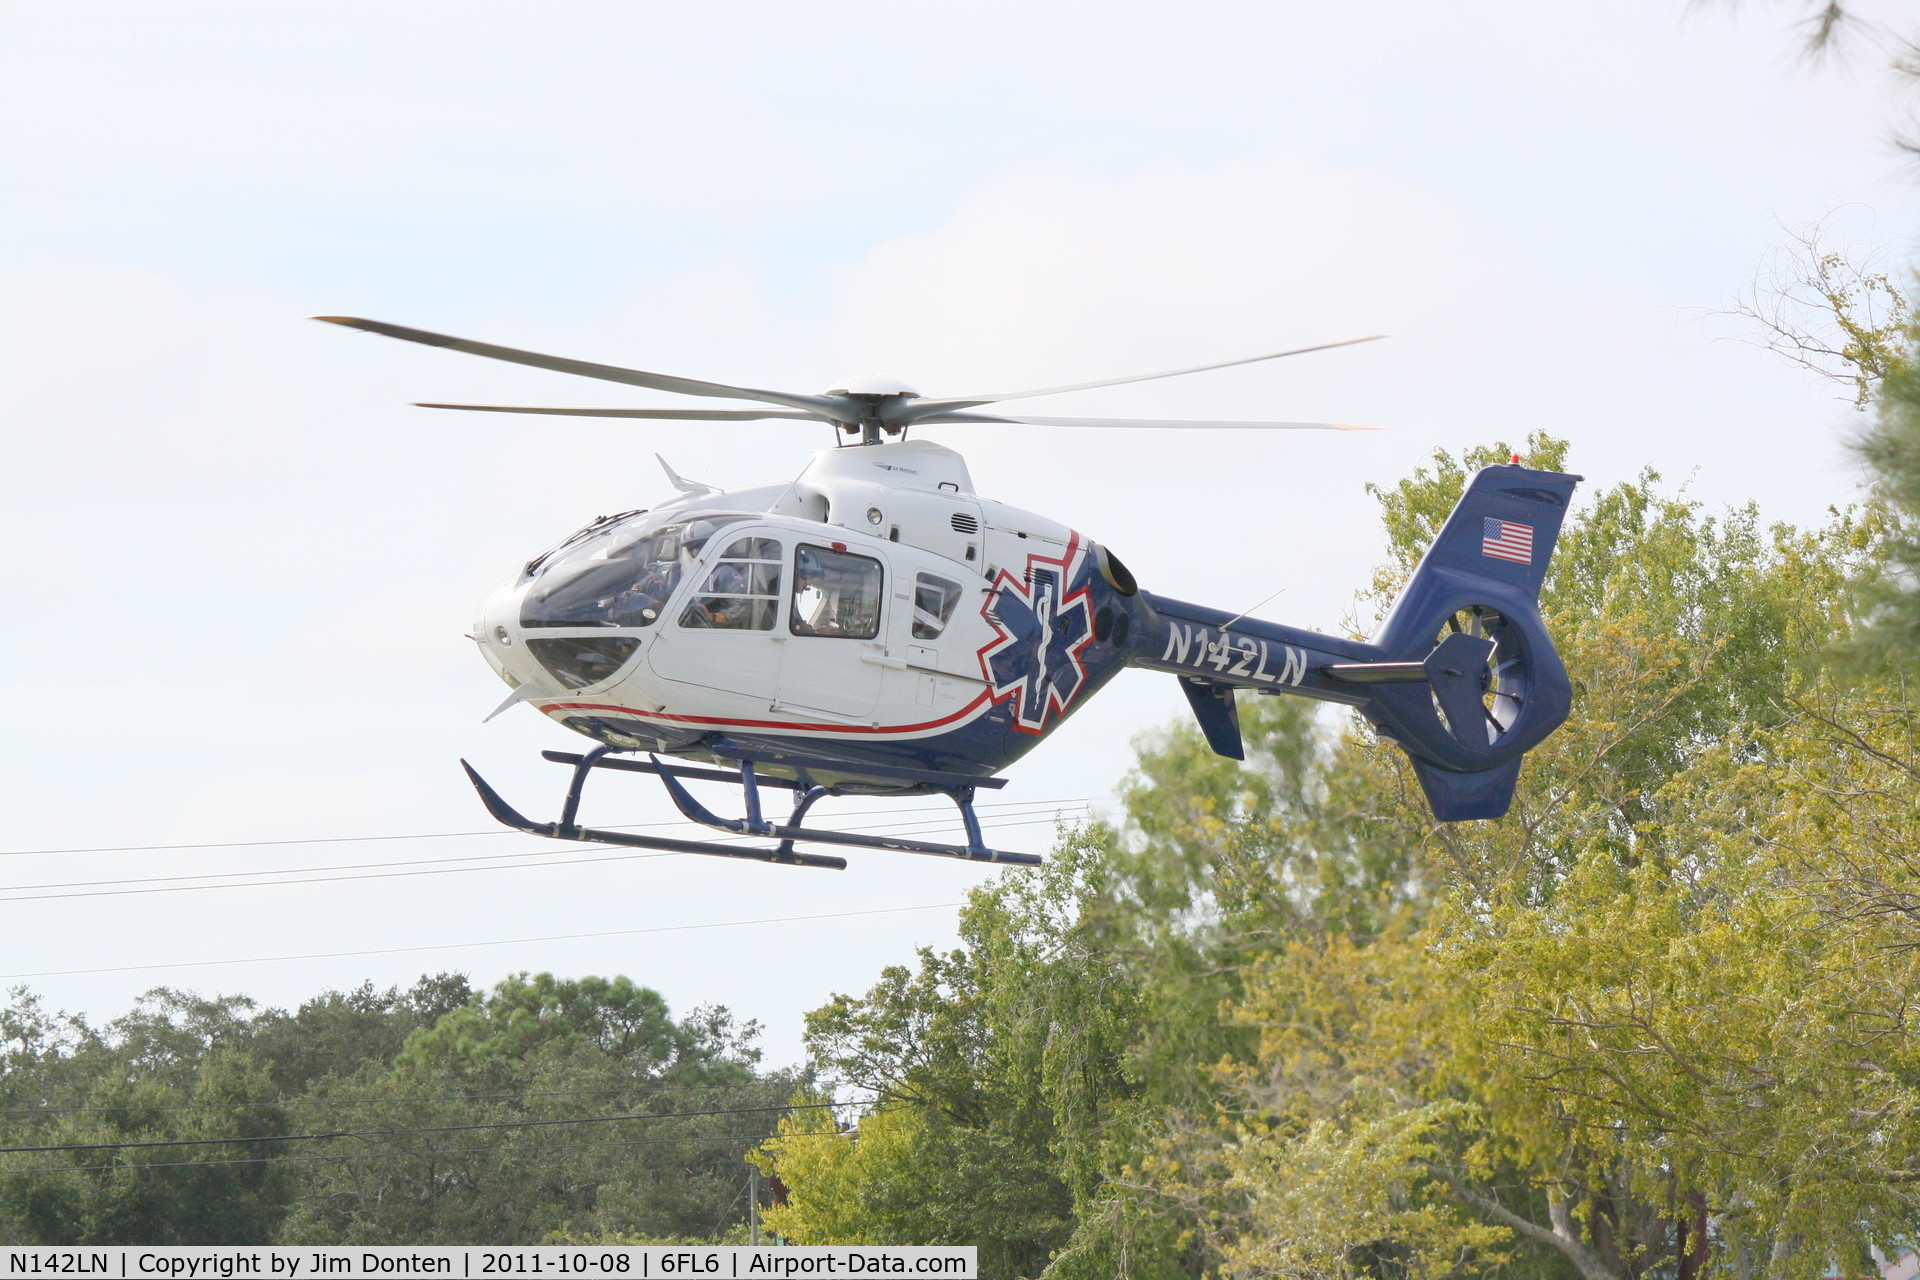 N142LN, 2004 Eurocopter EC-135P-2 C/N 0344, Bayflite lands at Sarasota County Fire Station 5 for open house